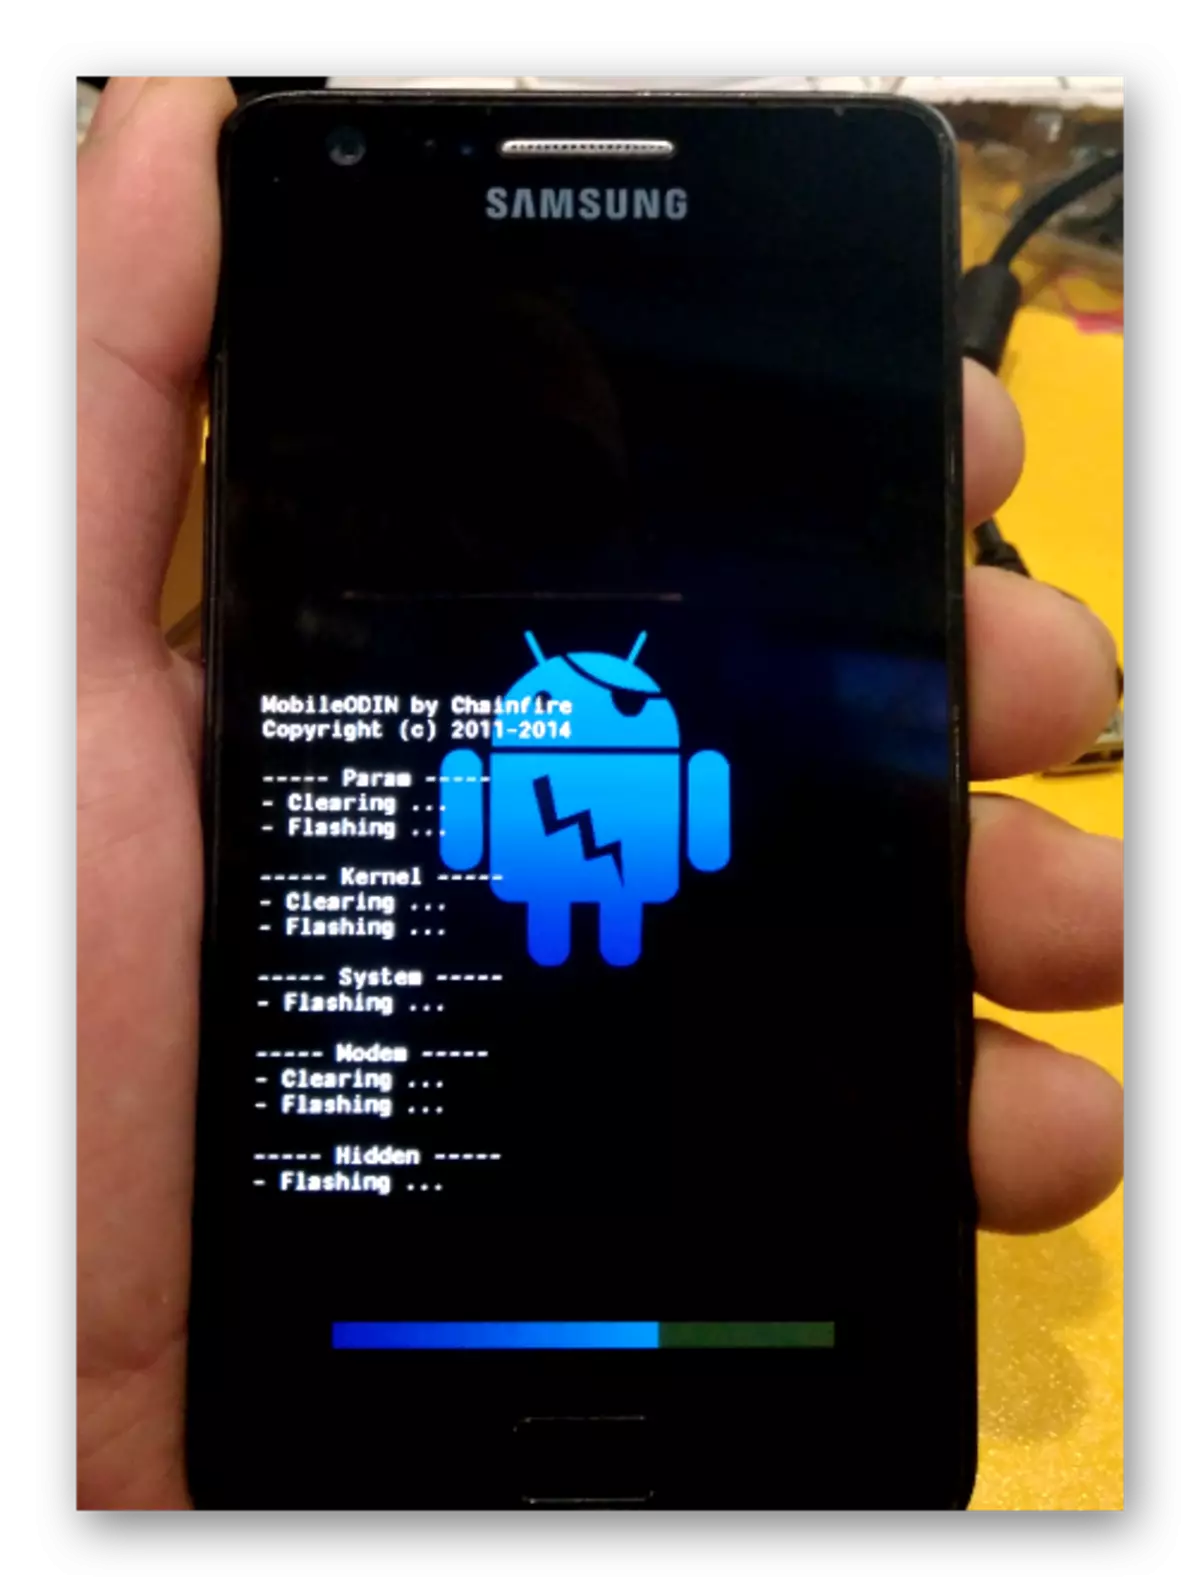 Samsung Galaxy S 2 GT-i9100 Mobile wevaNorse Anoita reinstalling ari firmware